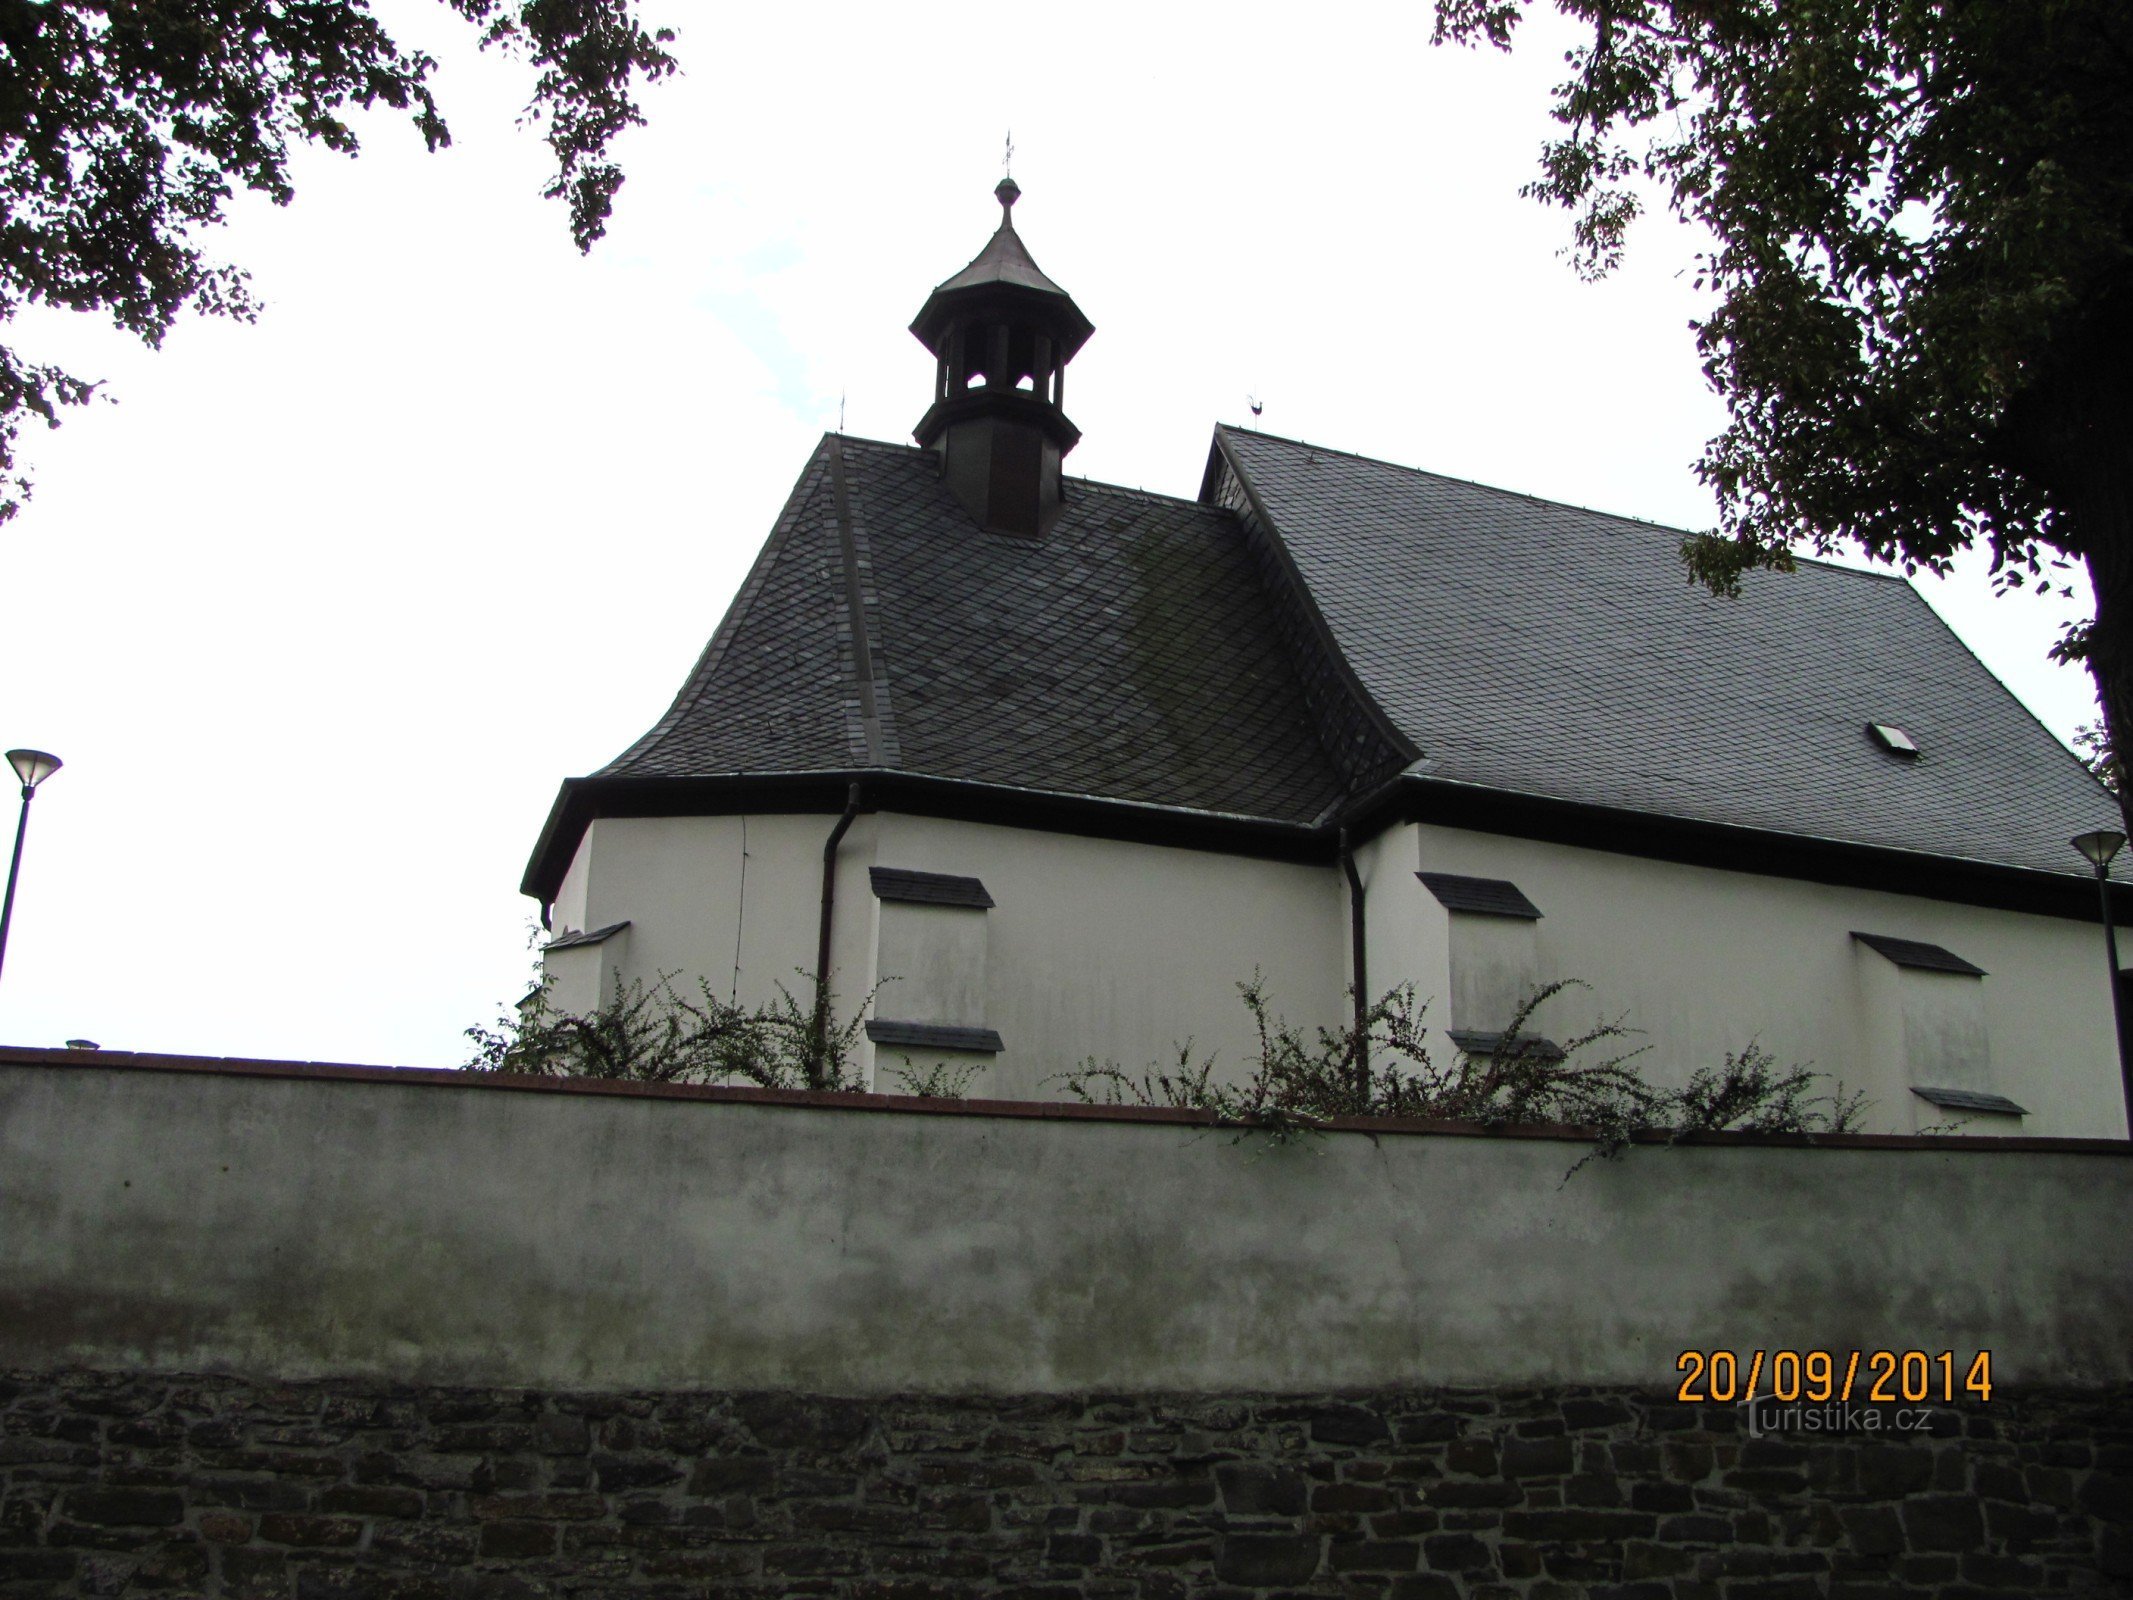 Church of the Holy Trinity in Klimkovice